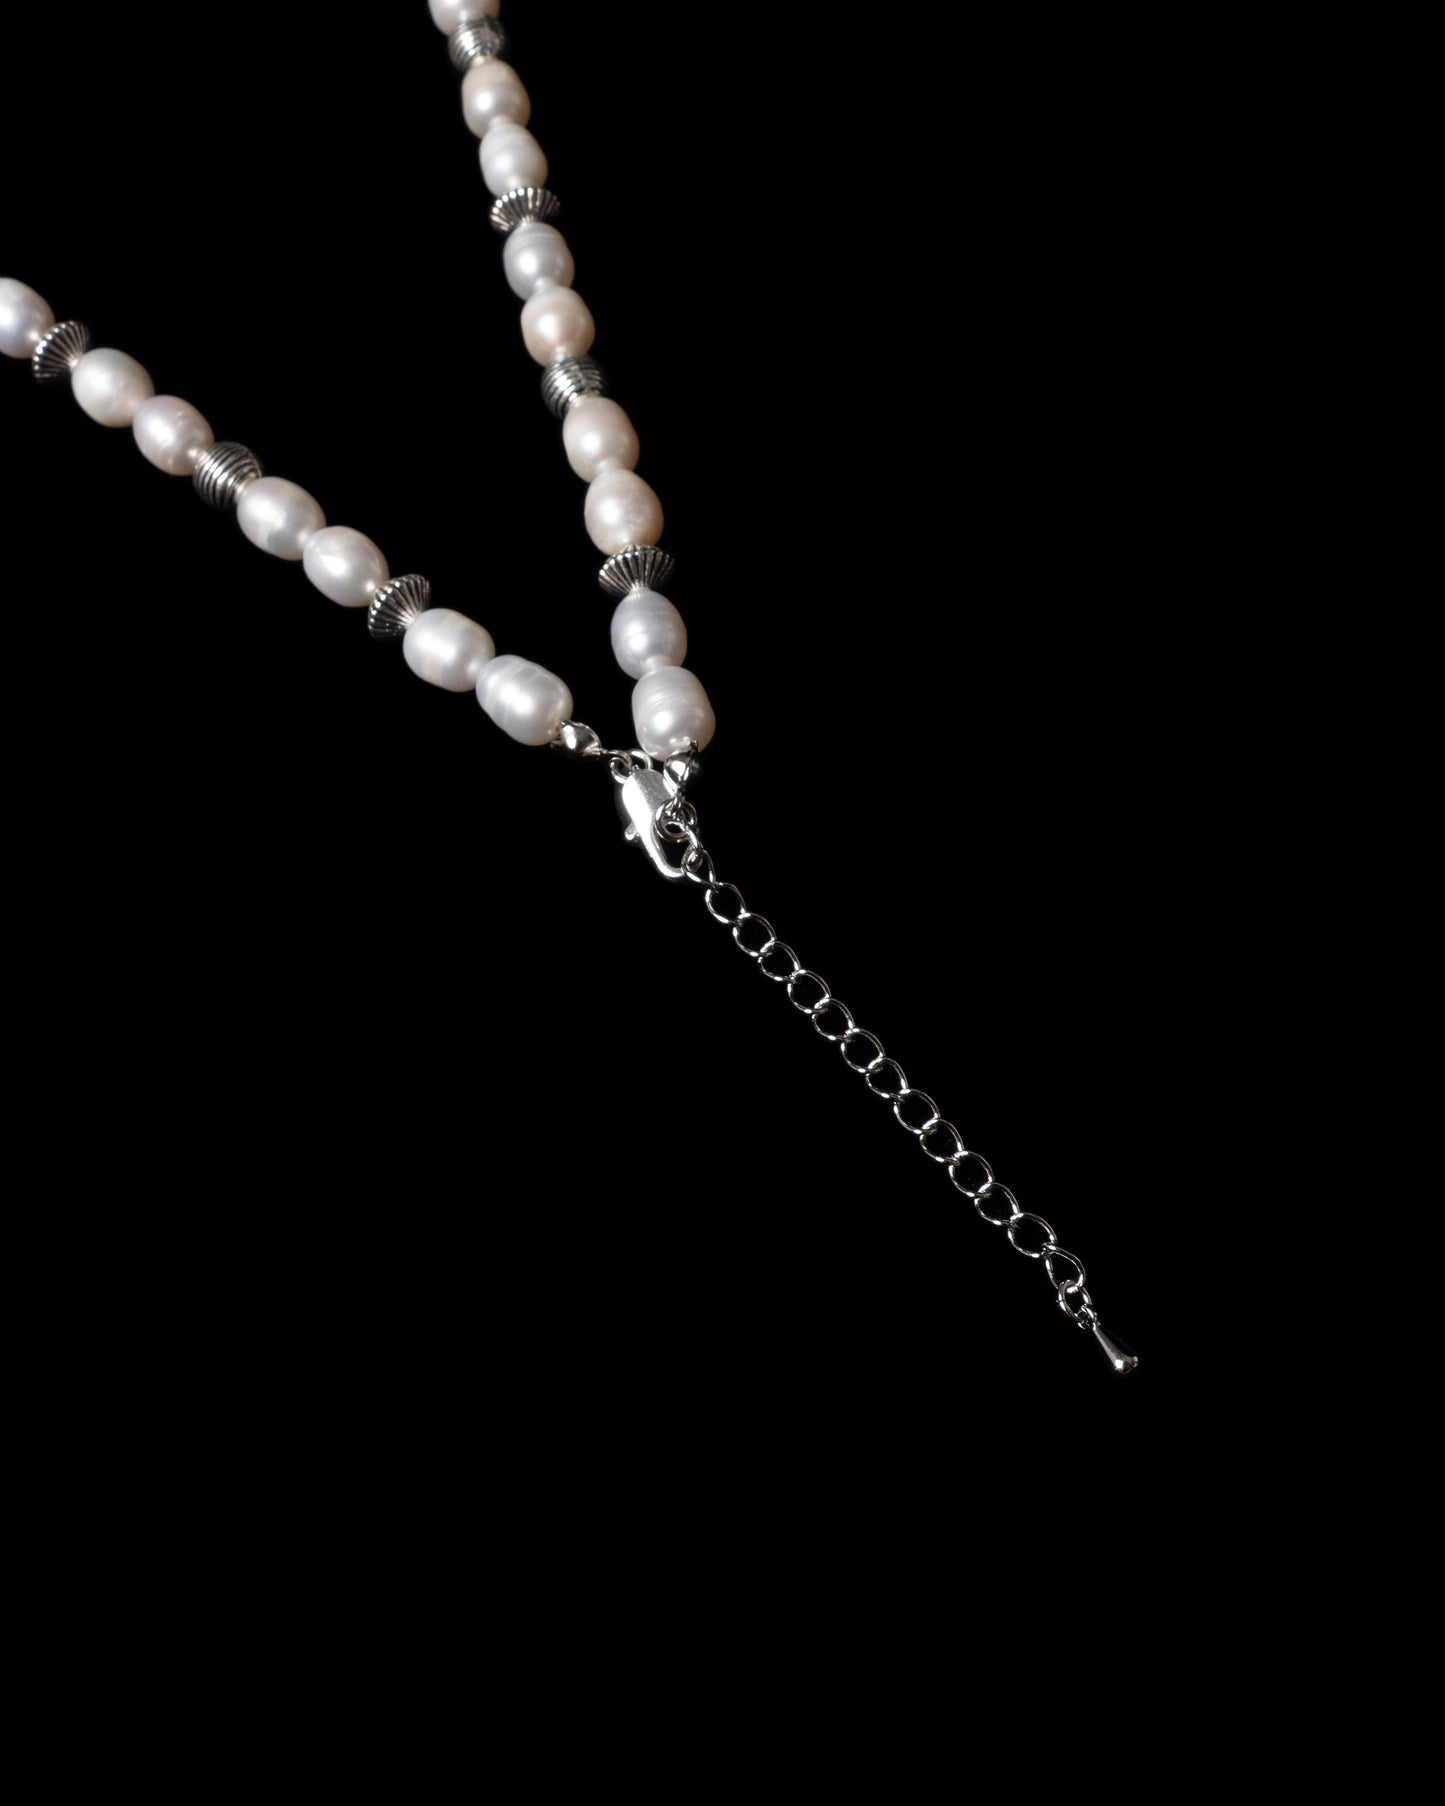 Antique silver pearl necklace